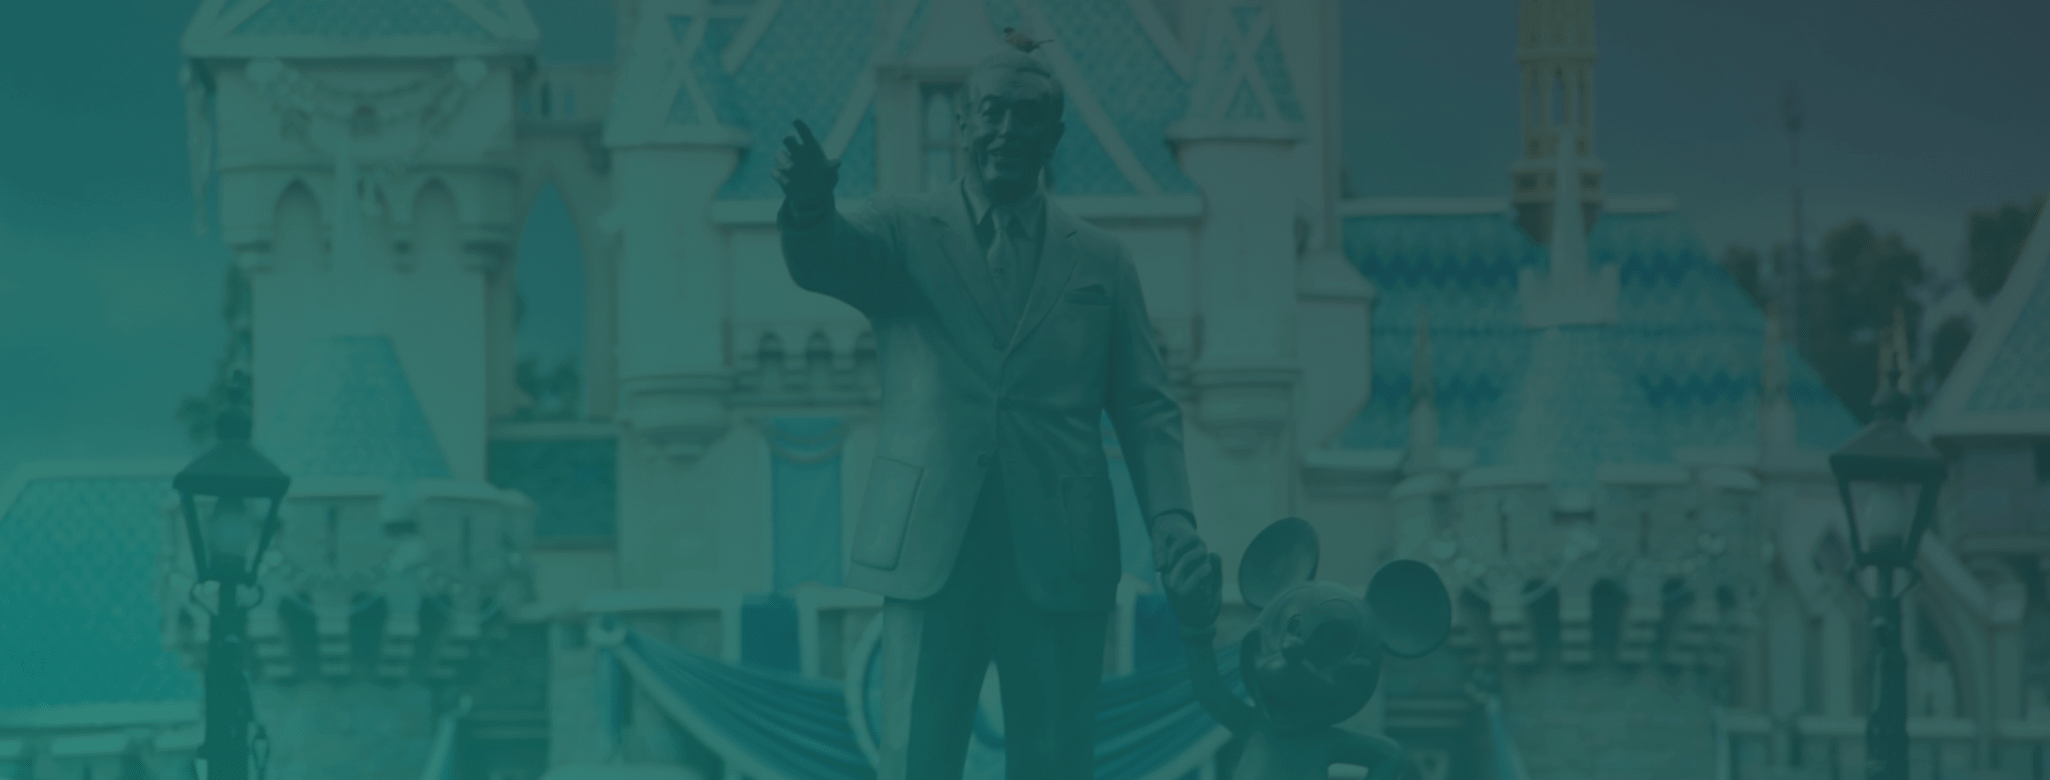 6 Lessons Everyone Should Learn From Walt Disney's Entrepreneurship Skills